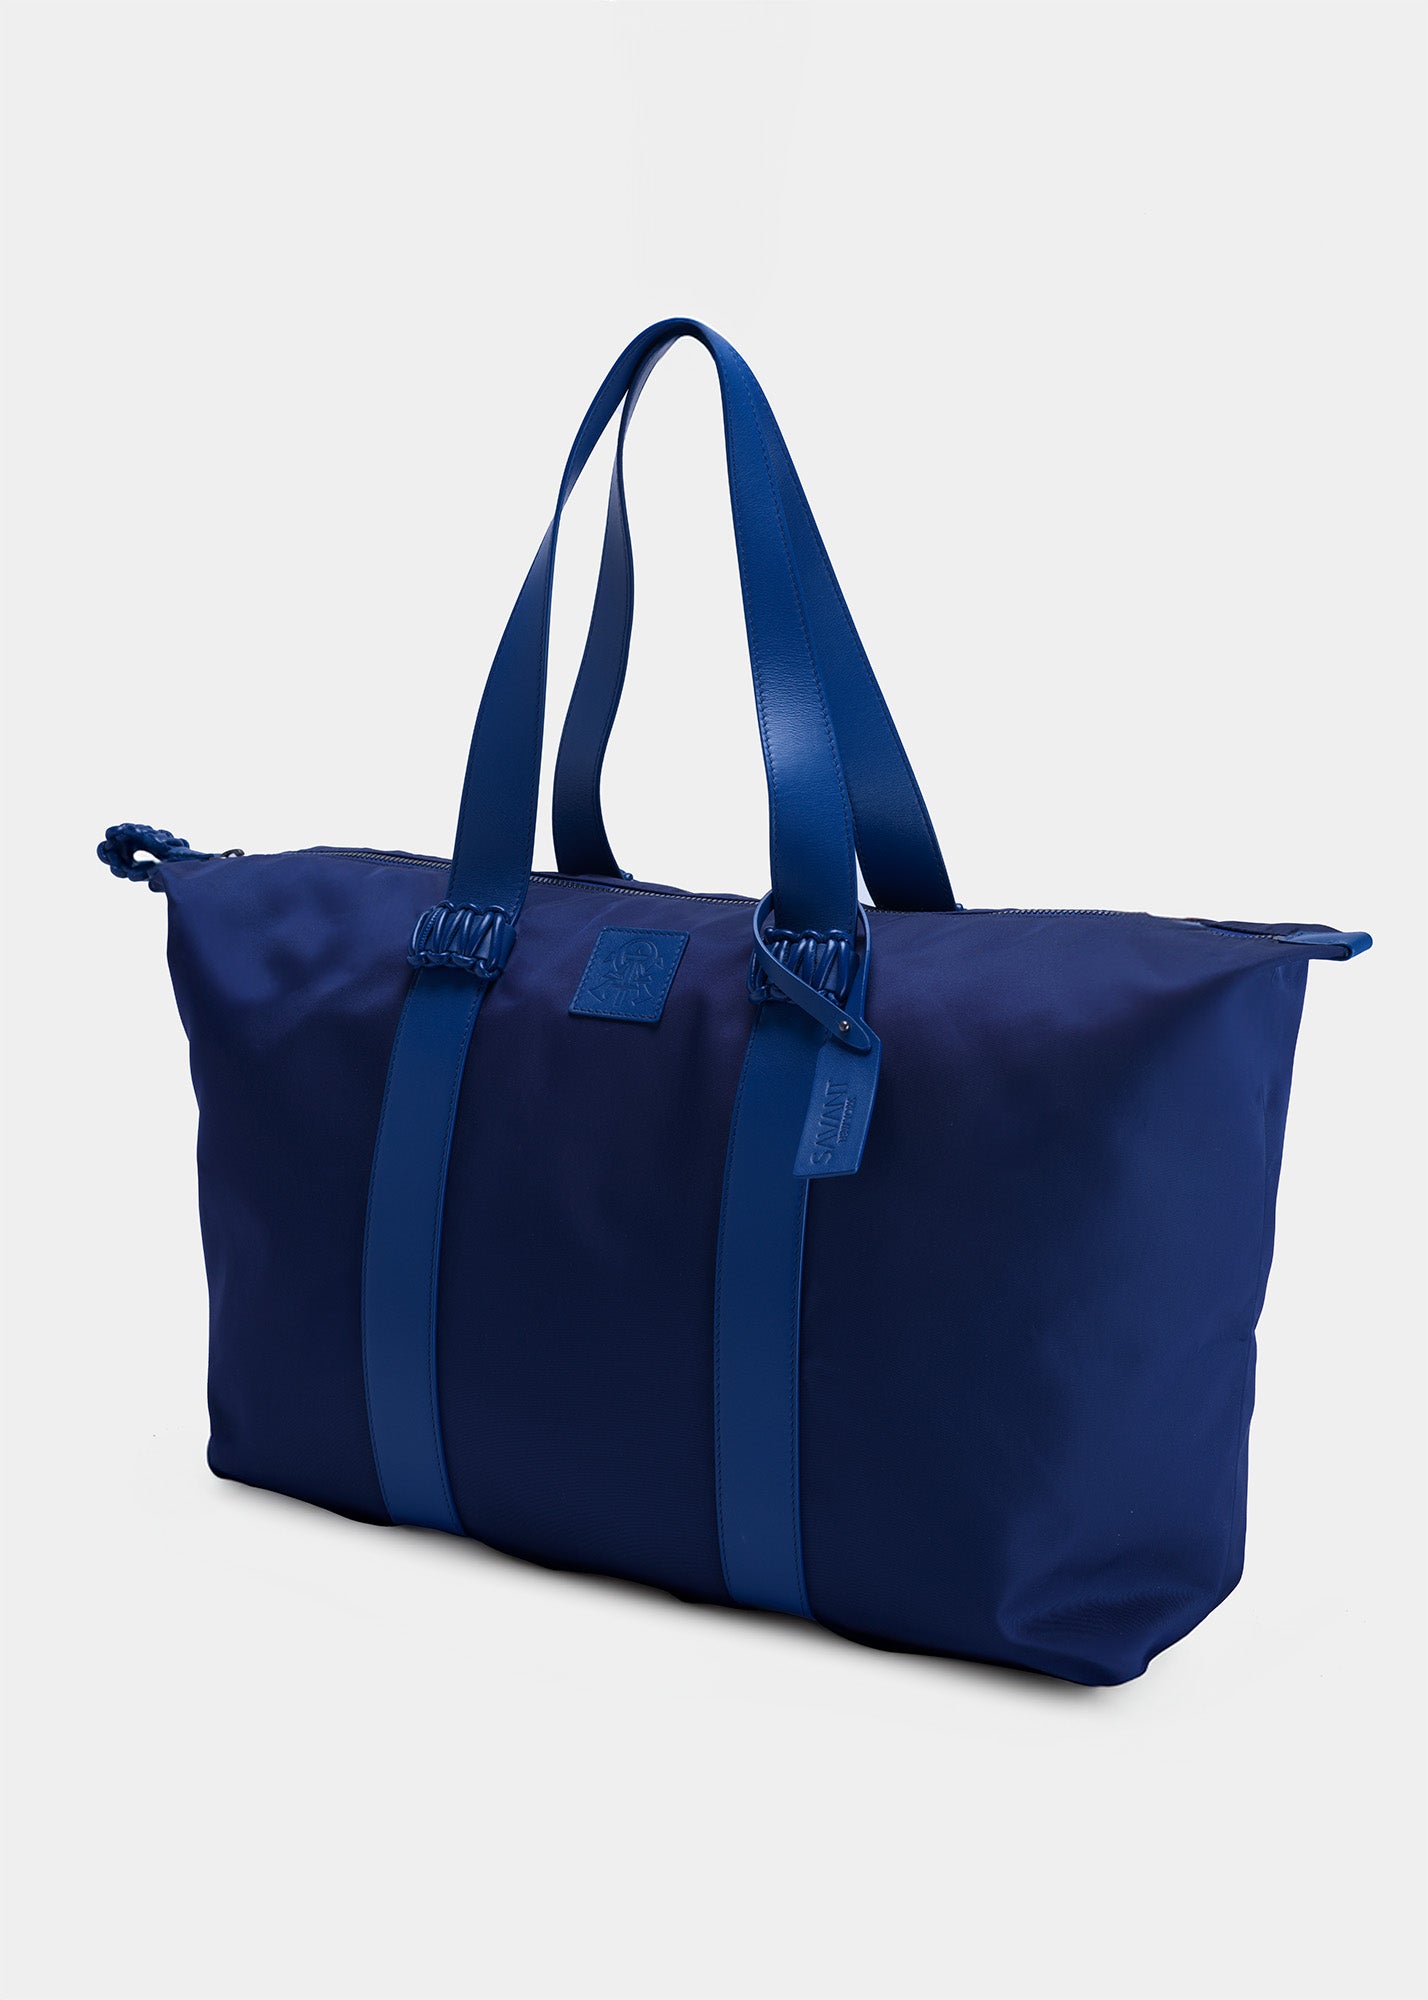 Savant Blue Nylon/Leather Duffle Bag, Medium